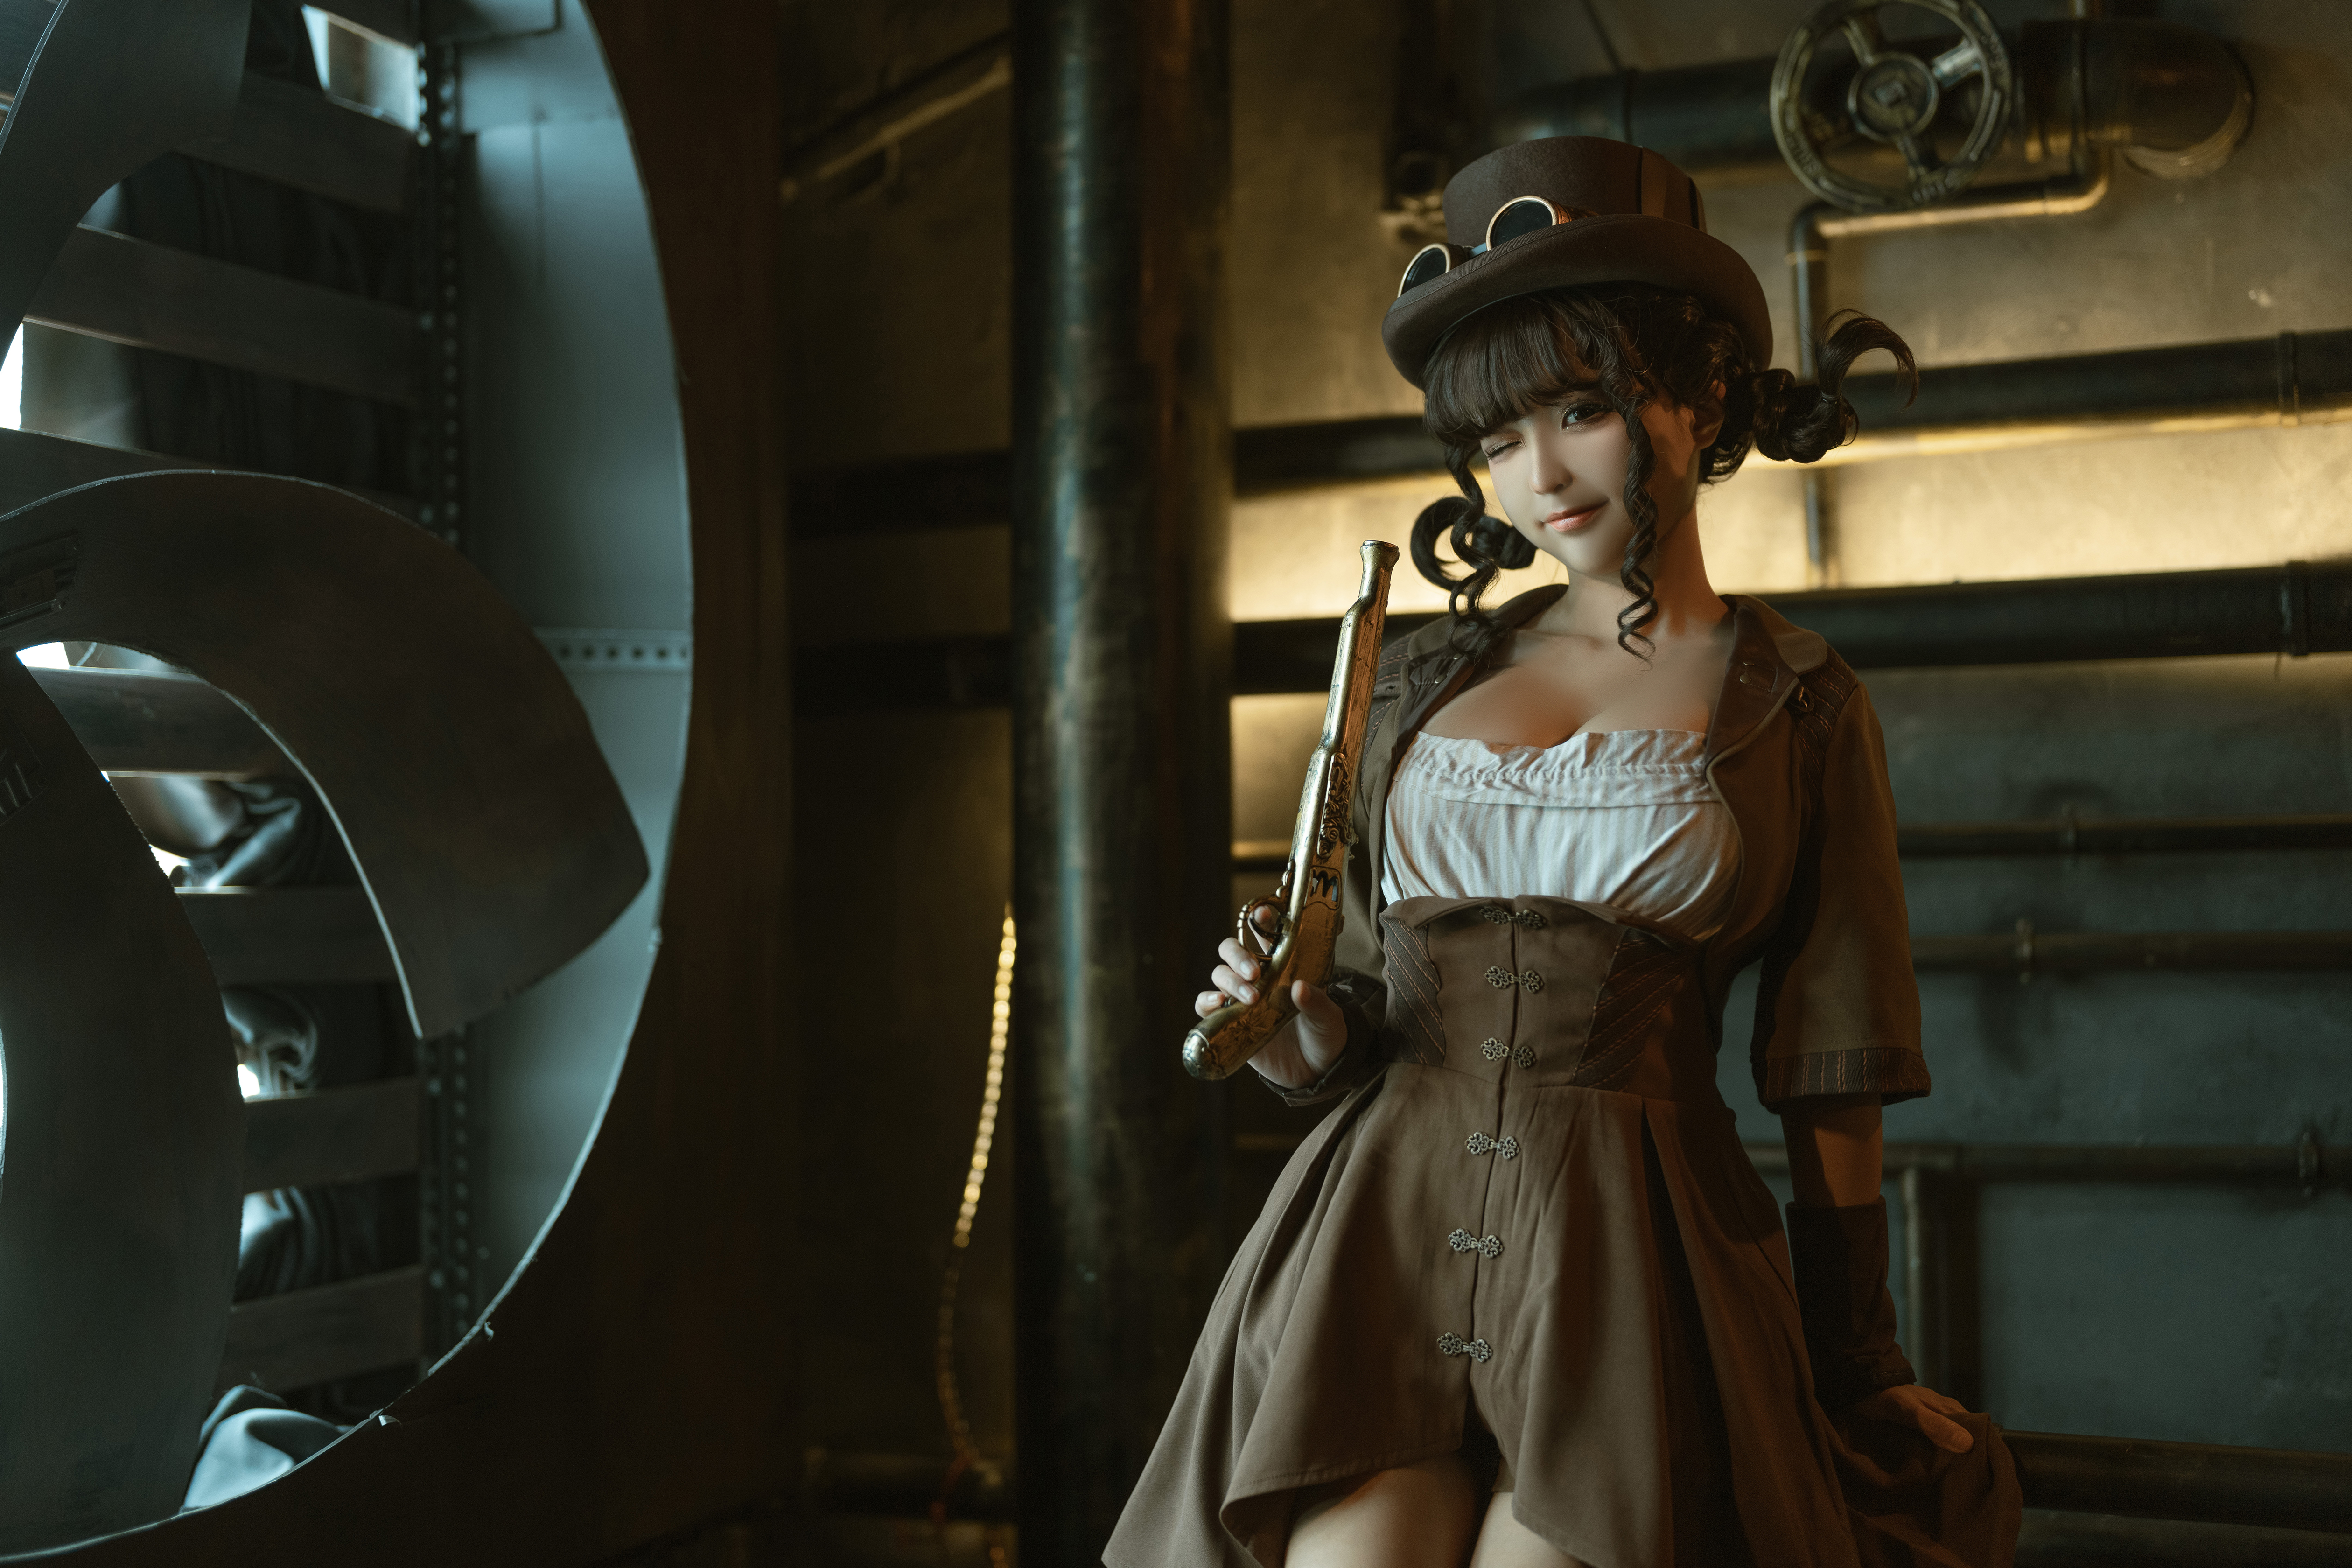 People 5040x3360 Chun Momo women model Asian cosplay steampunk steampunk girl women indoors wink women with hats dress weapon girls with guns